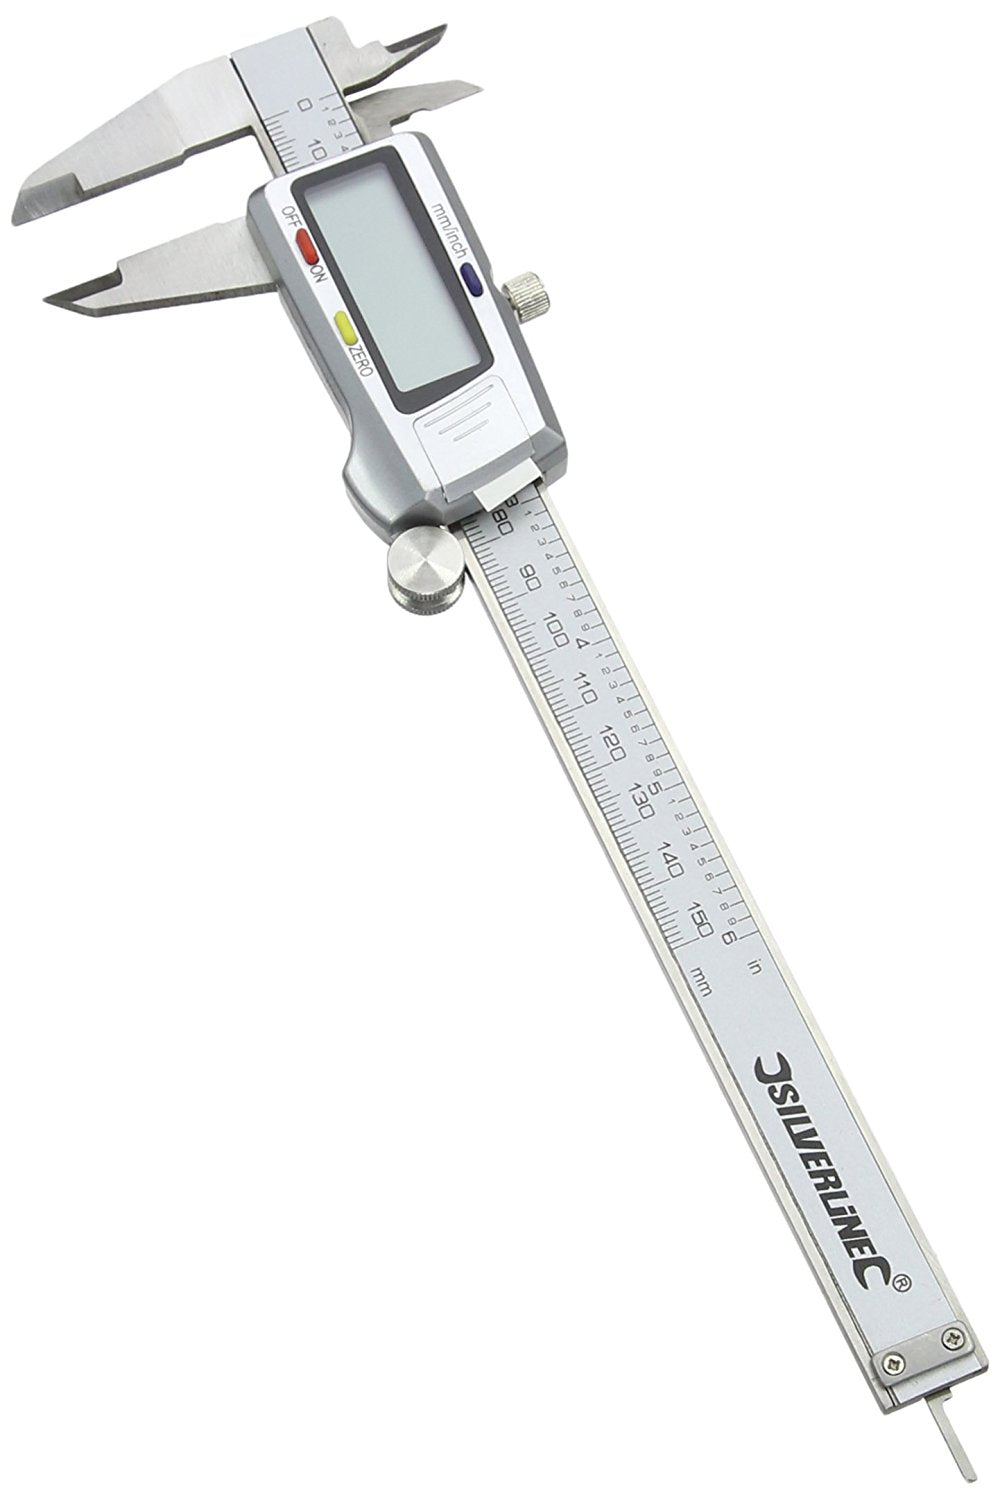 Silverline Digital Vernier Caliper 150mm